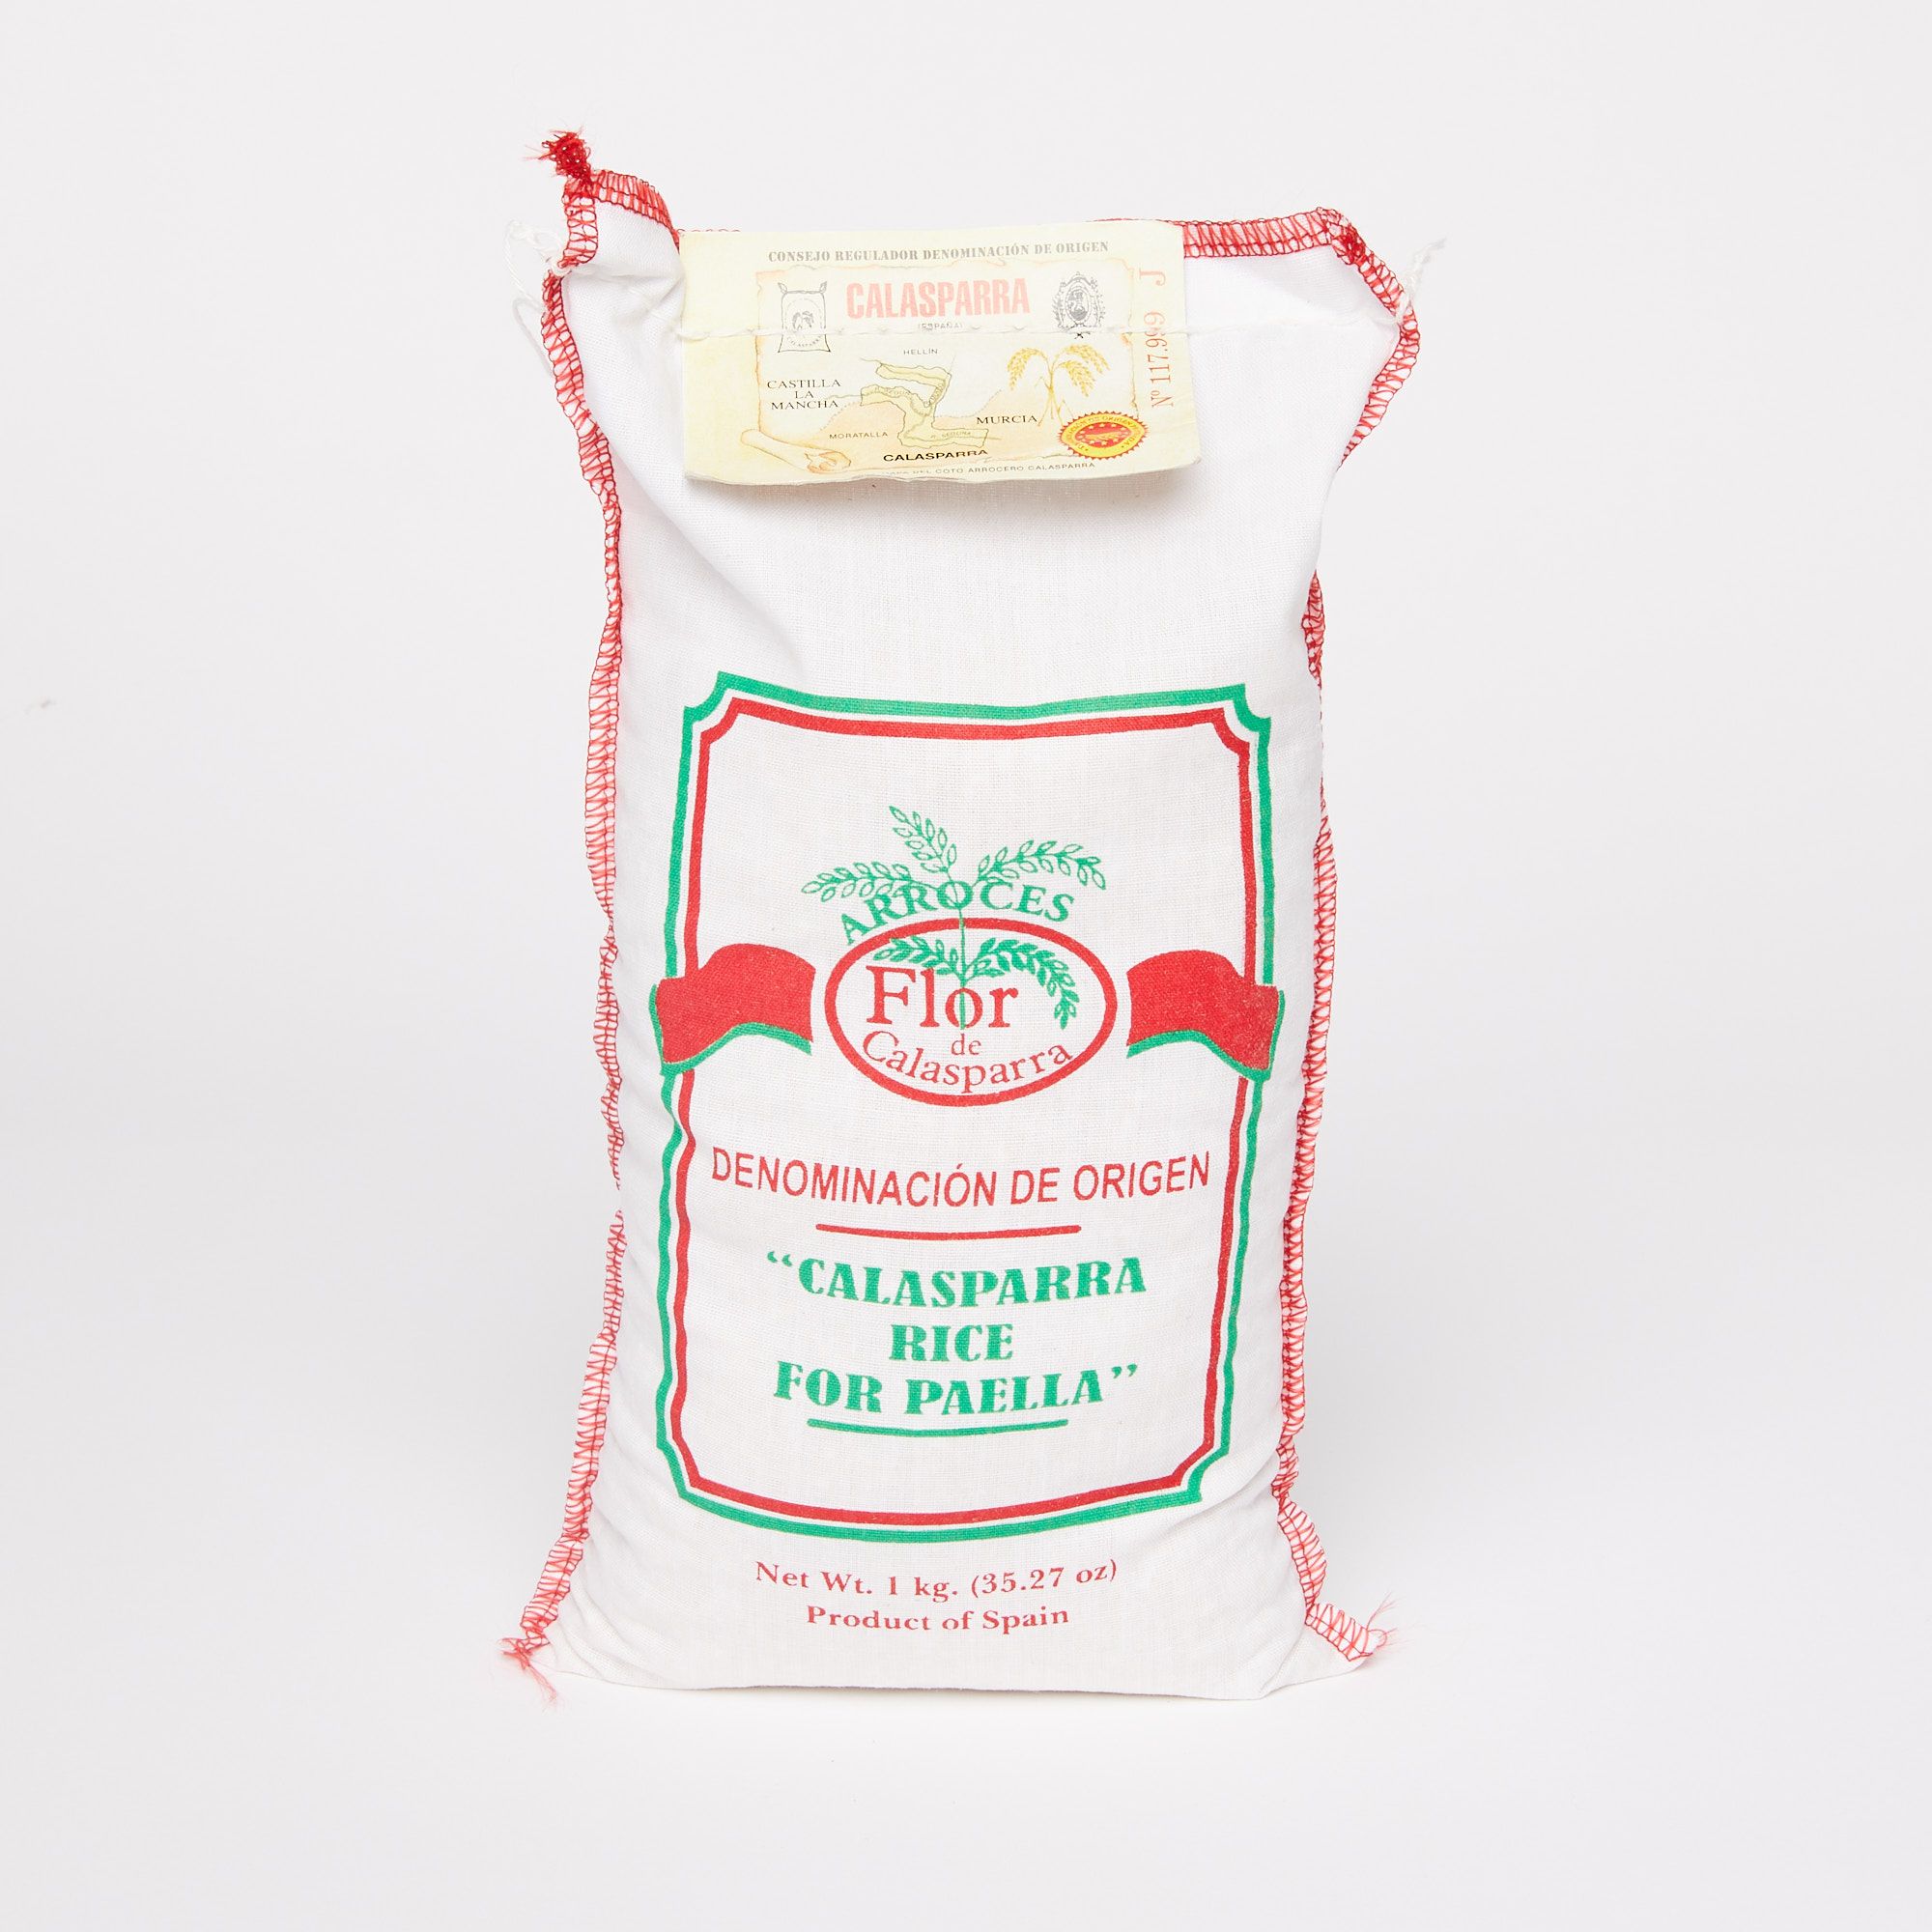 bag of paella rice